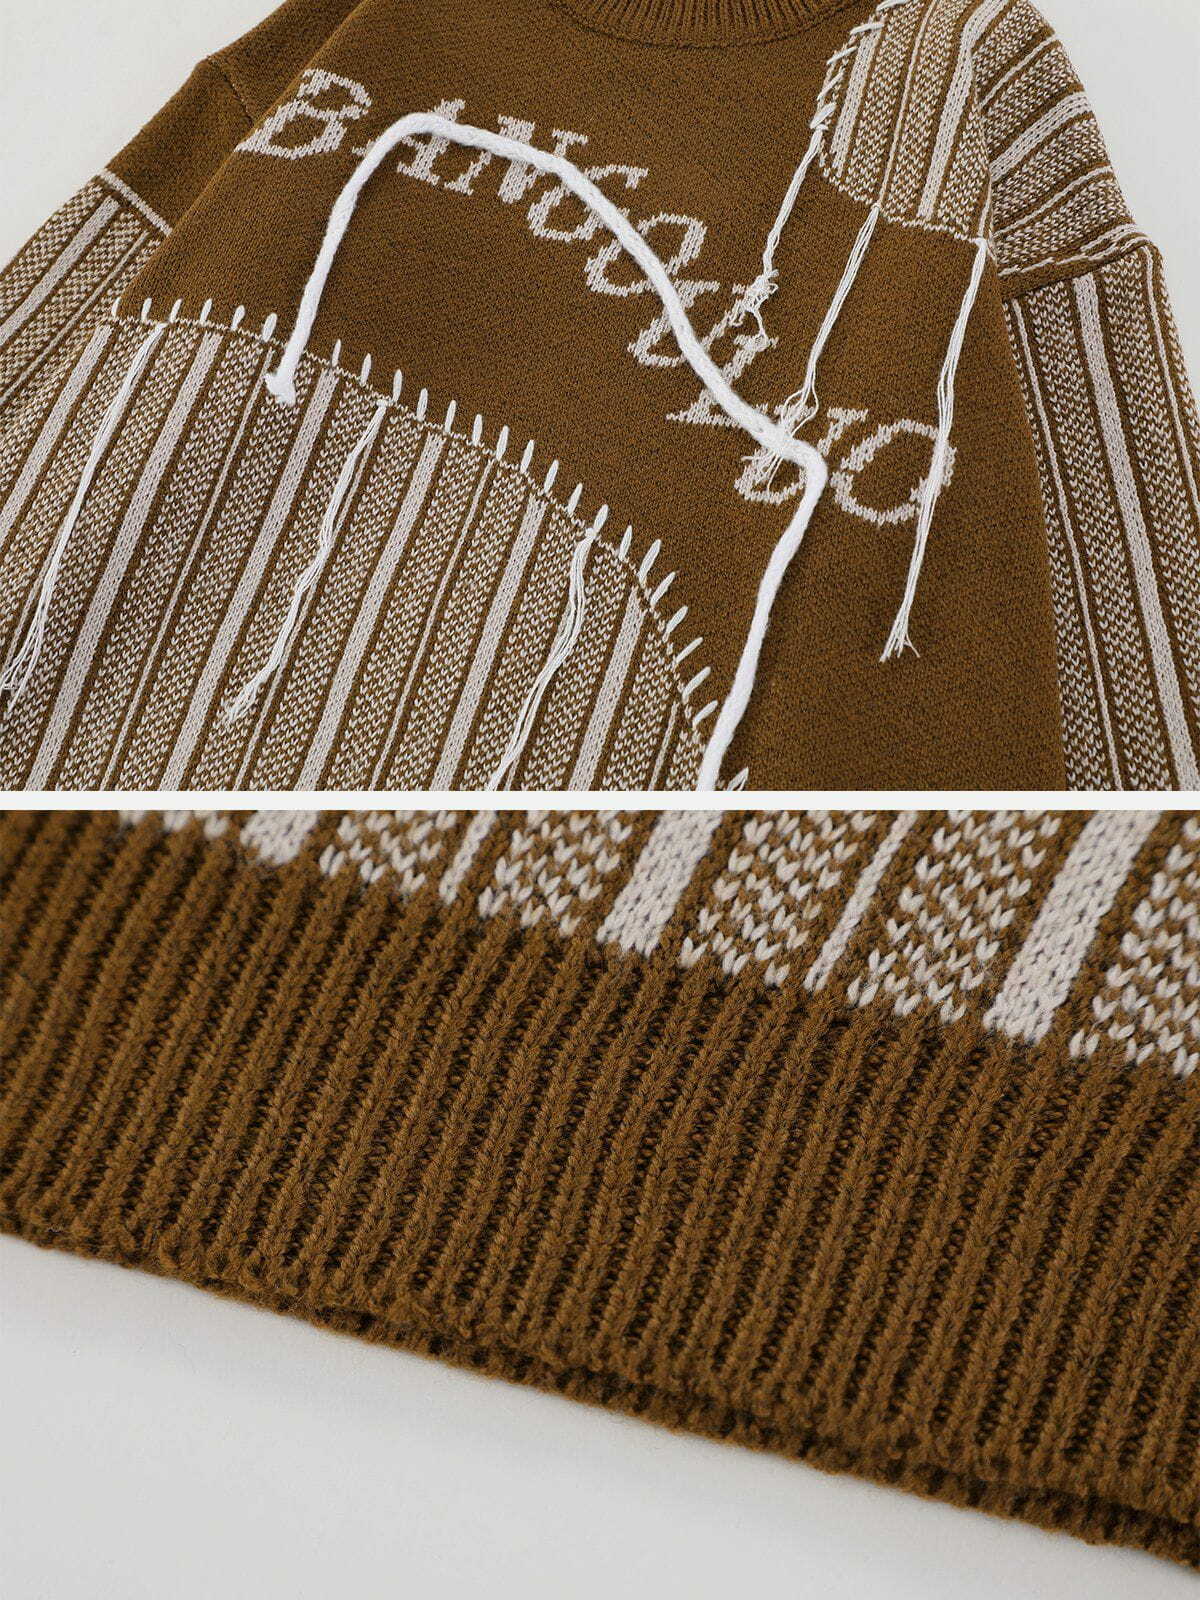 tassel detail knit sweater edgy streetwear essential 3397